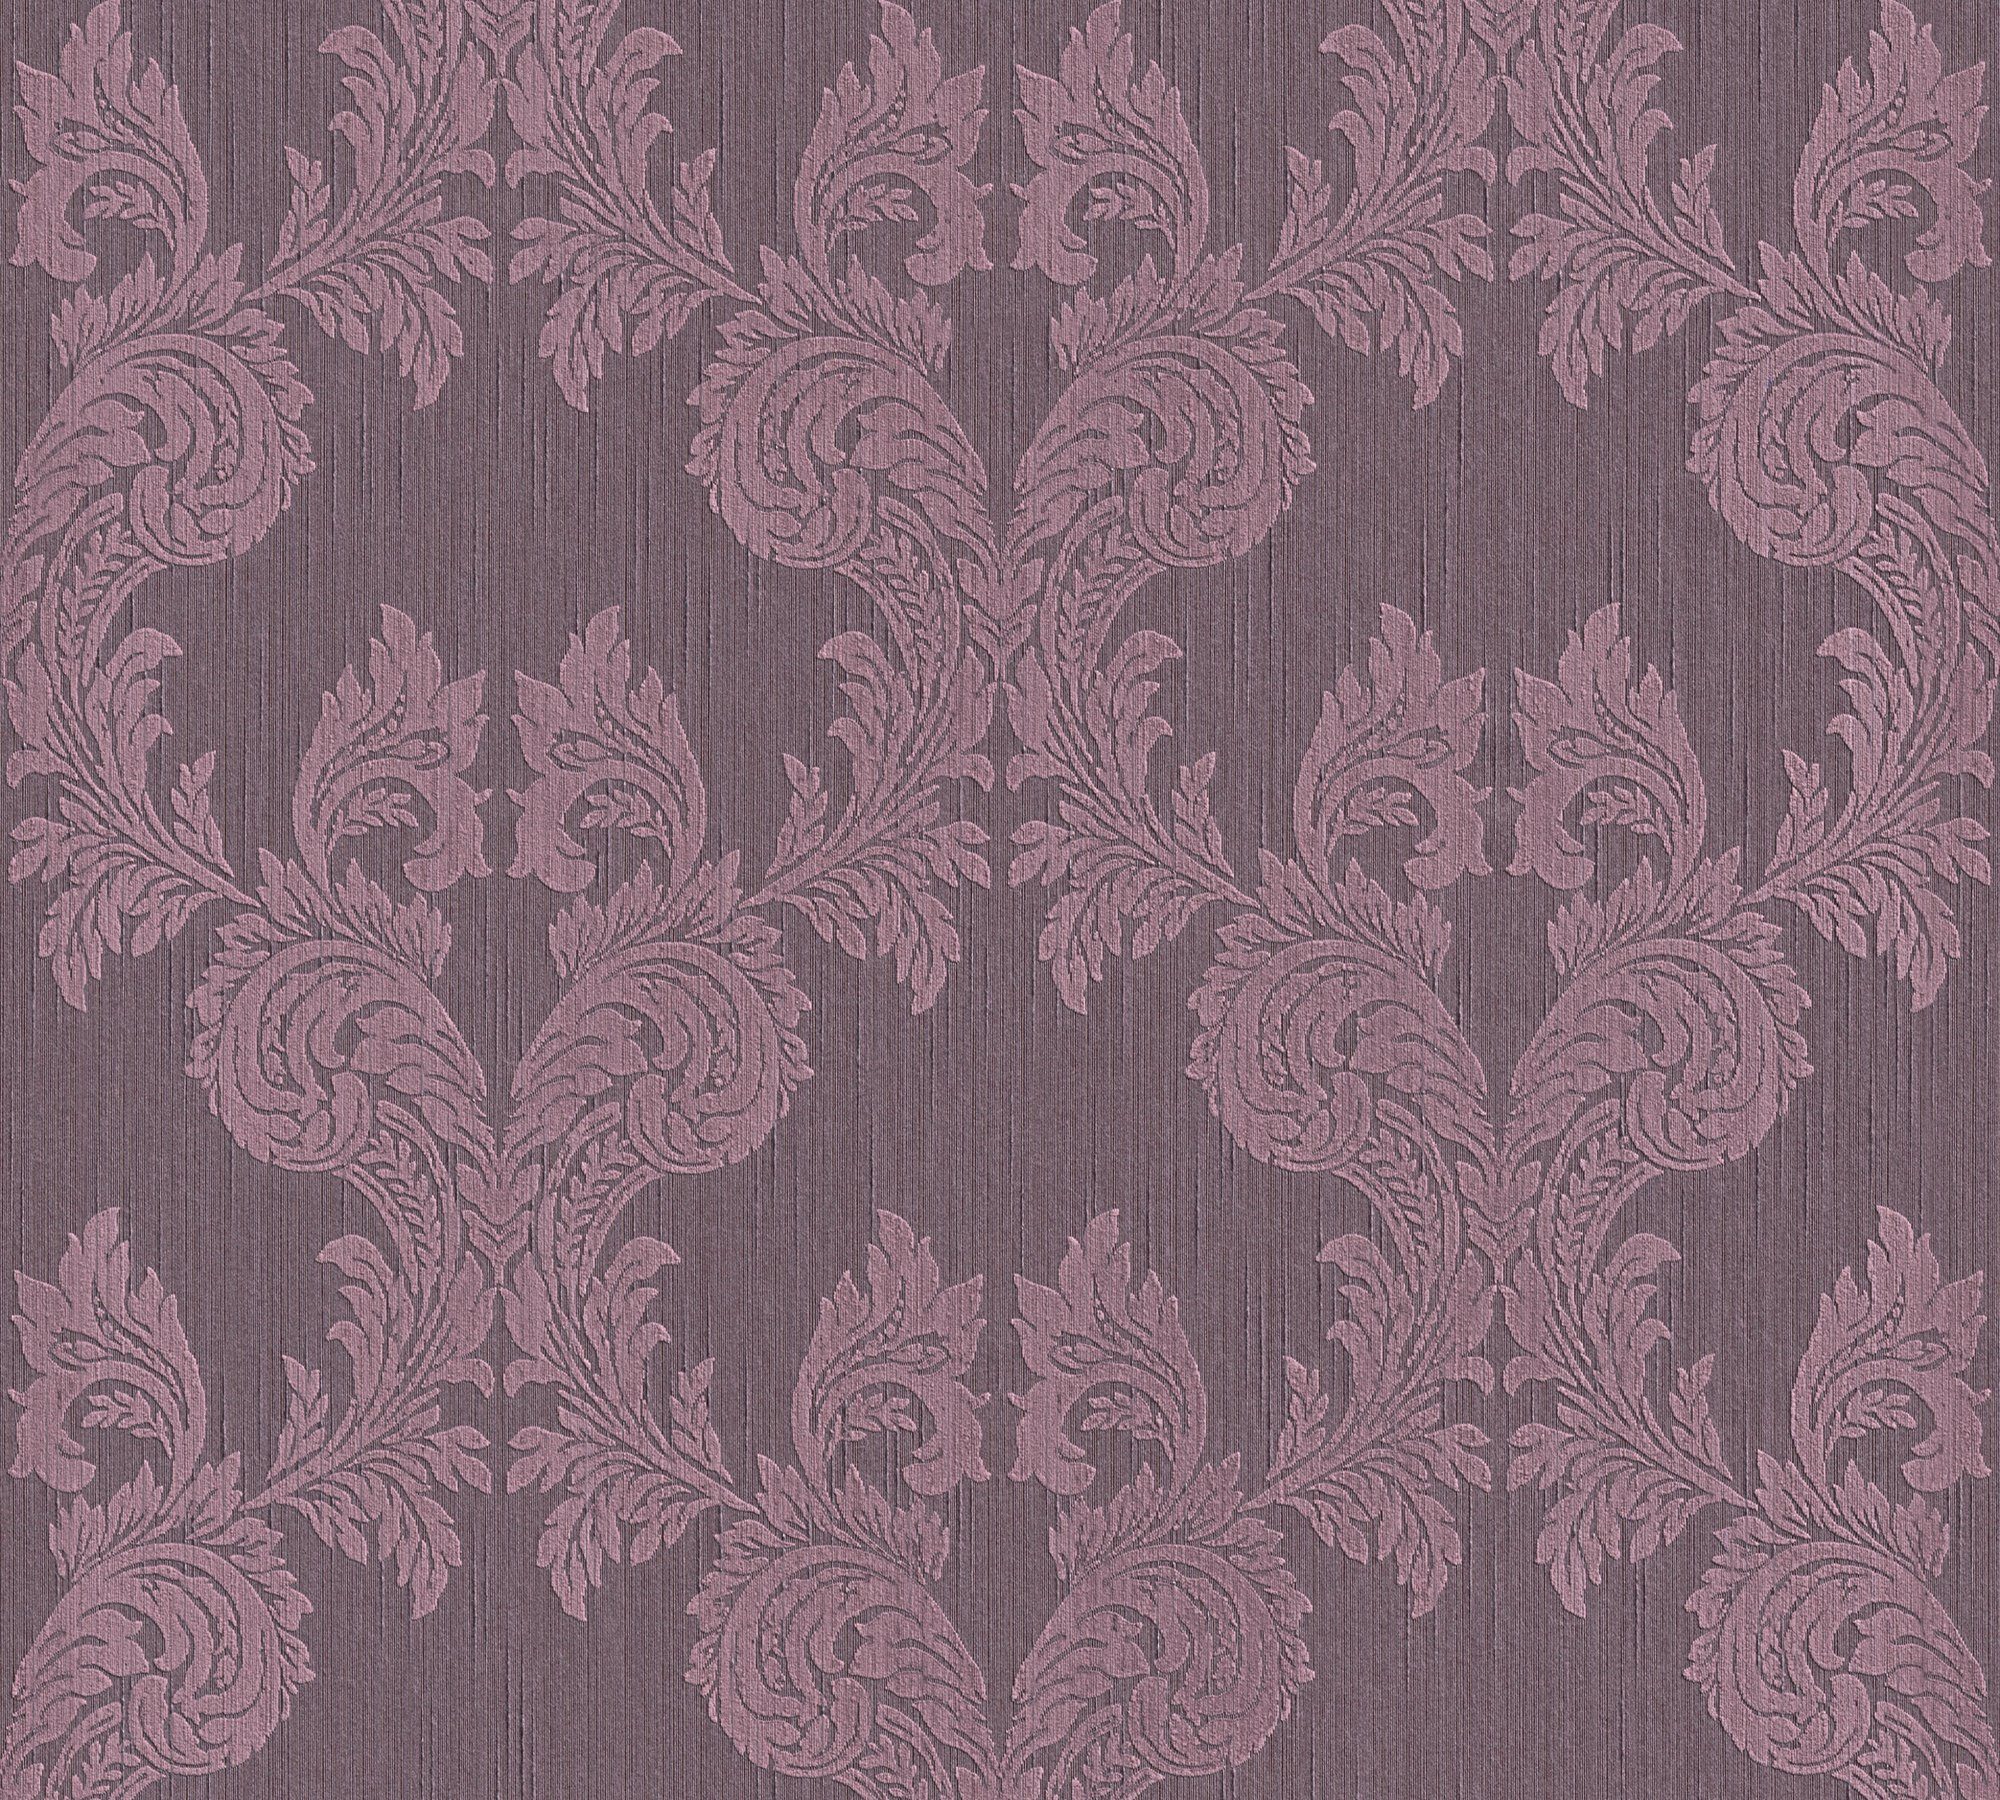 Tapete Barock Textiltapete Architects violett Création floral, Paper samtig, A.S. Tessuto, Barock,